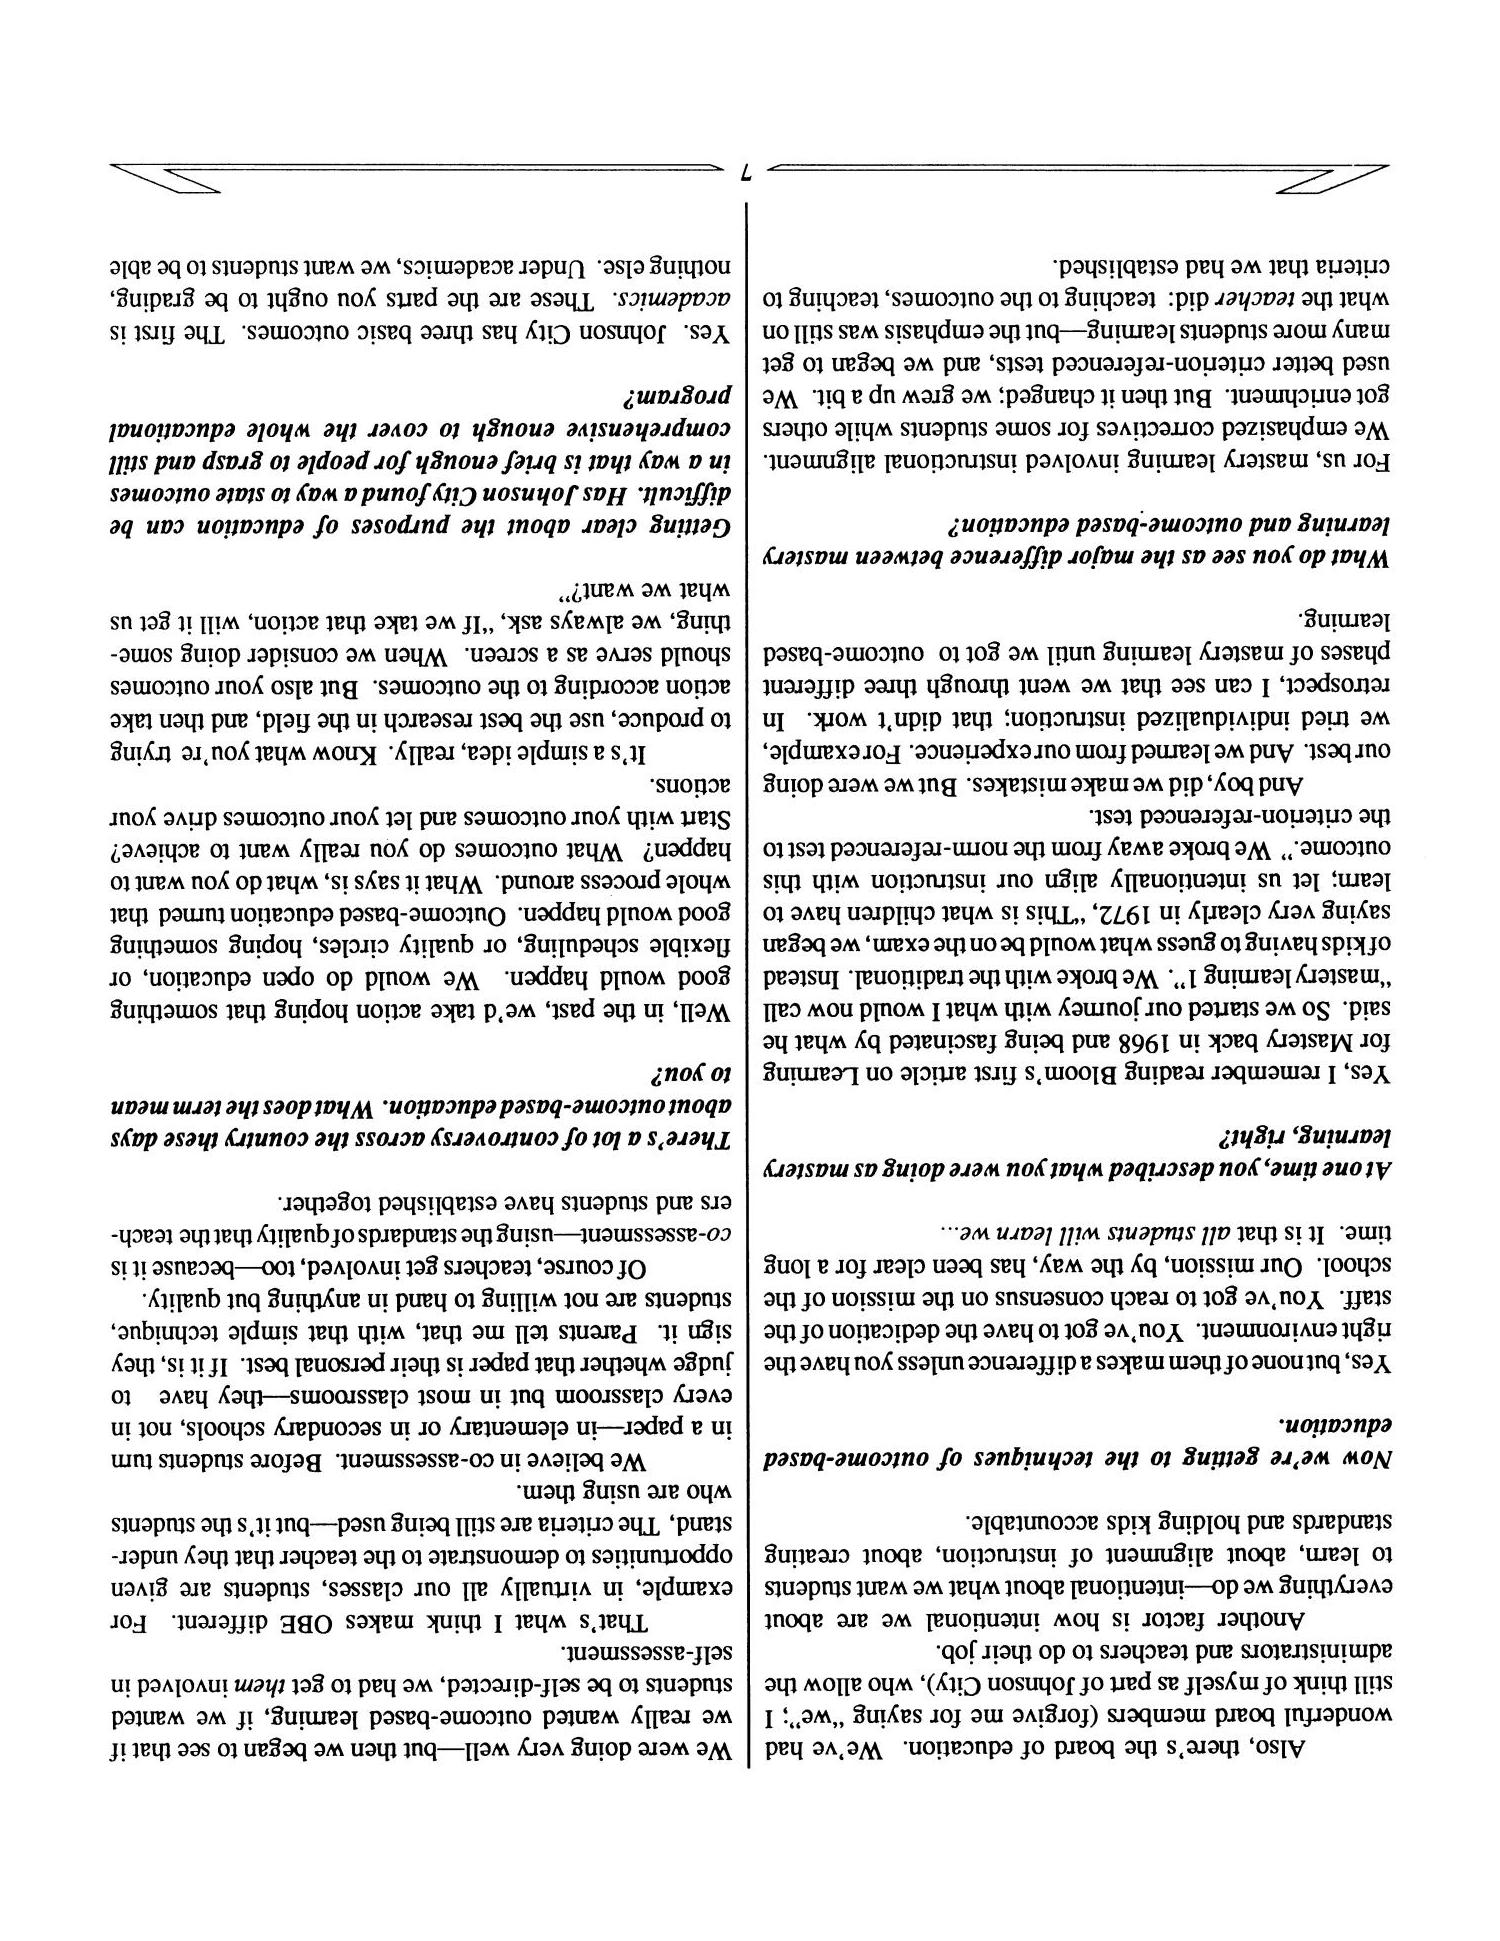 Journal of the Effective Schools Project, Volume 1, 1994
                                                
                                                    7
                                                